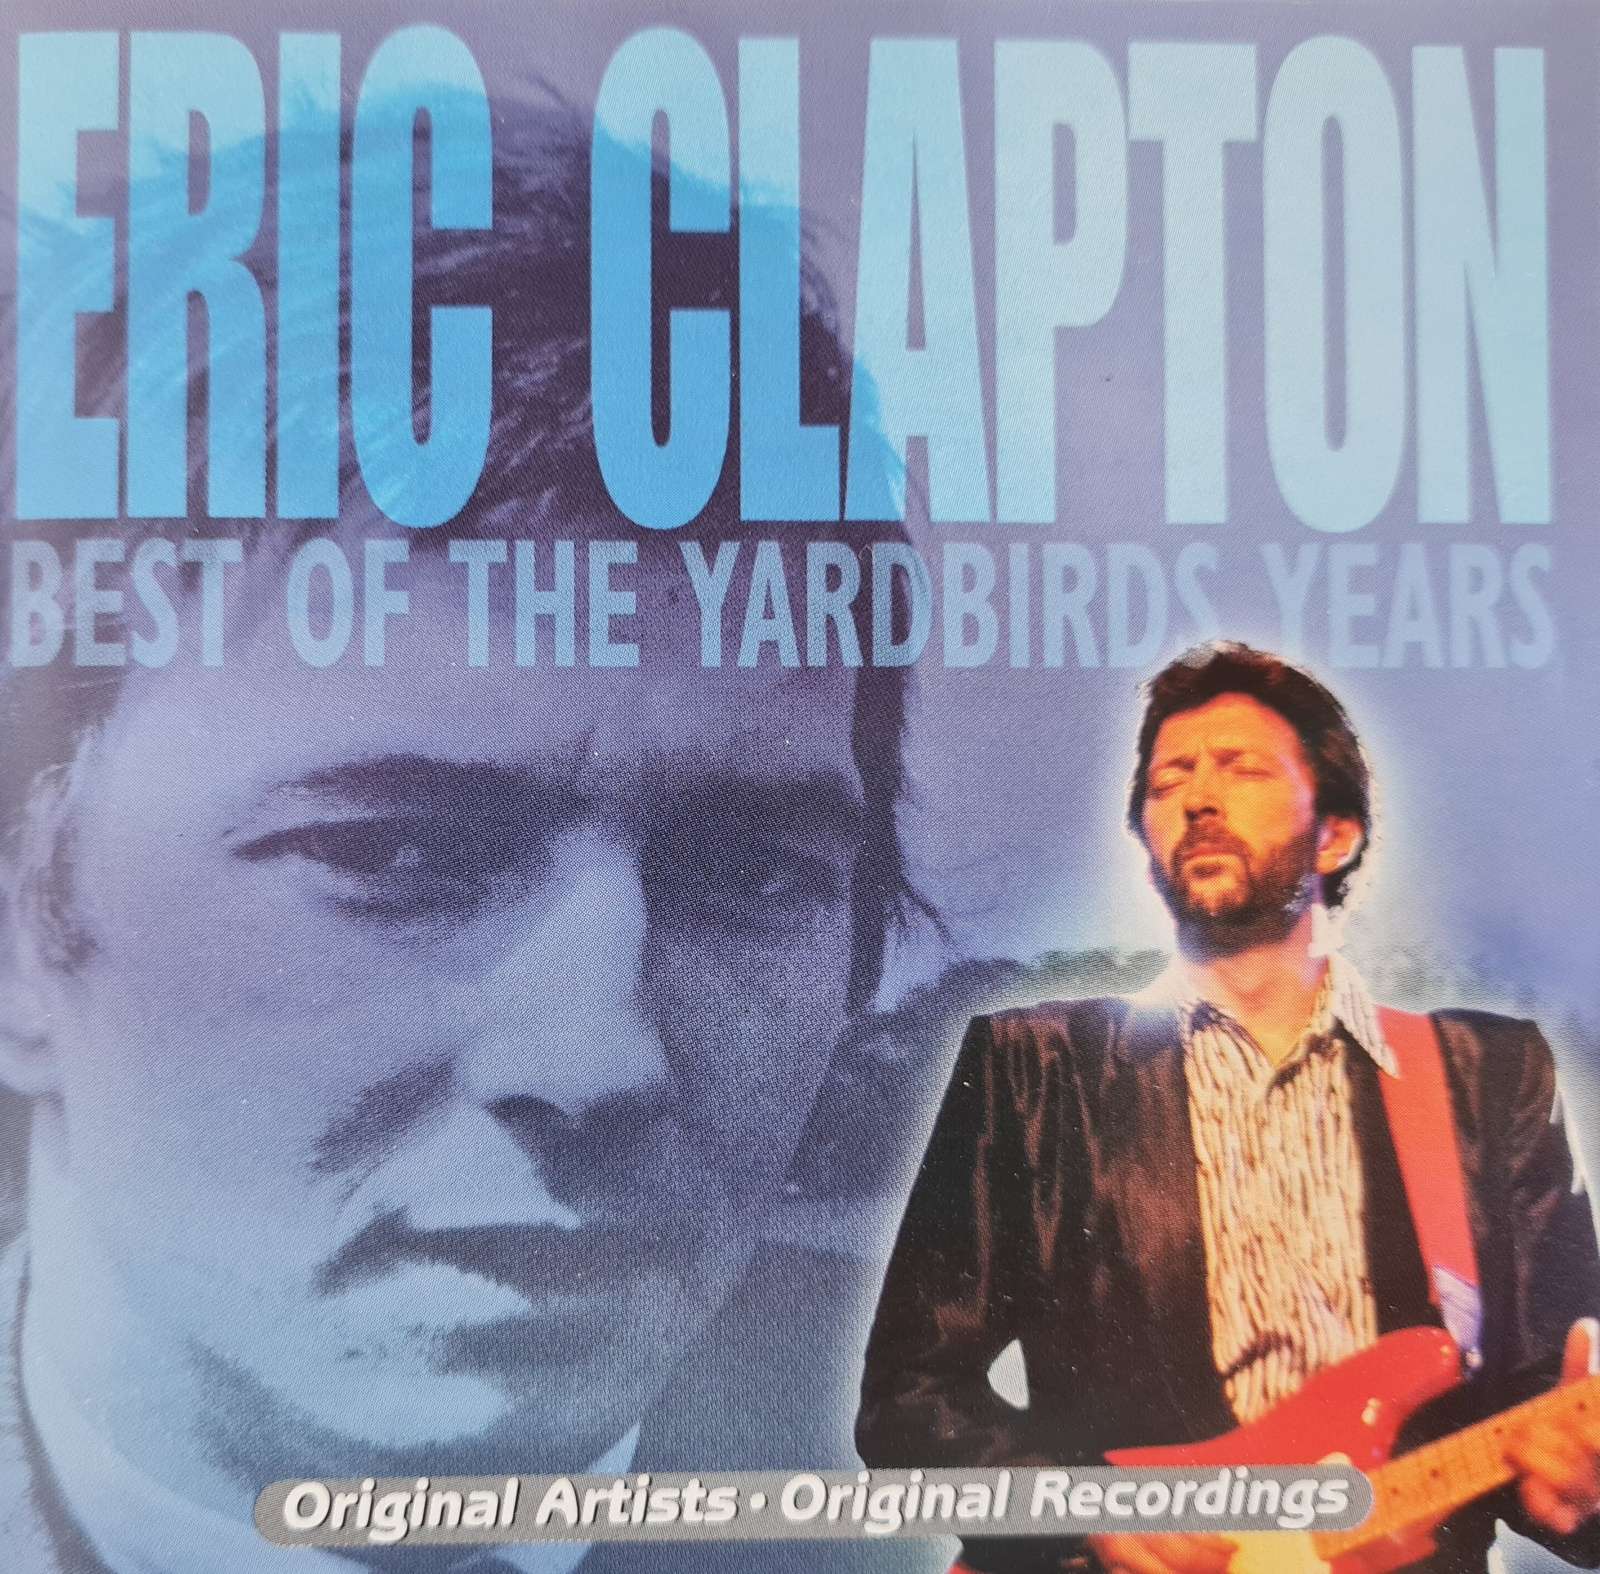 Eric Clapton - Best of The Yardbirds Years (CD)